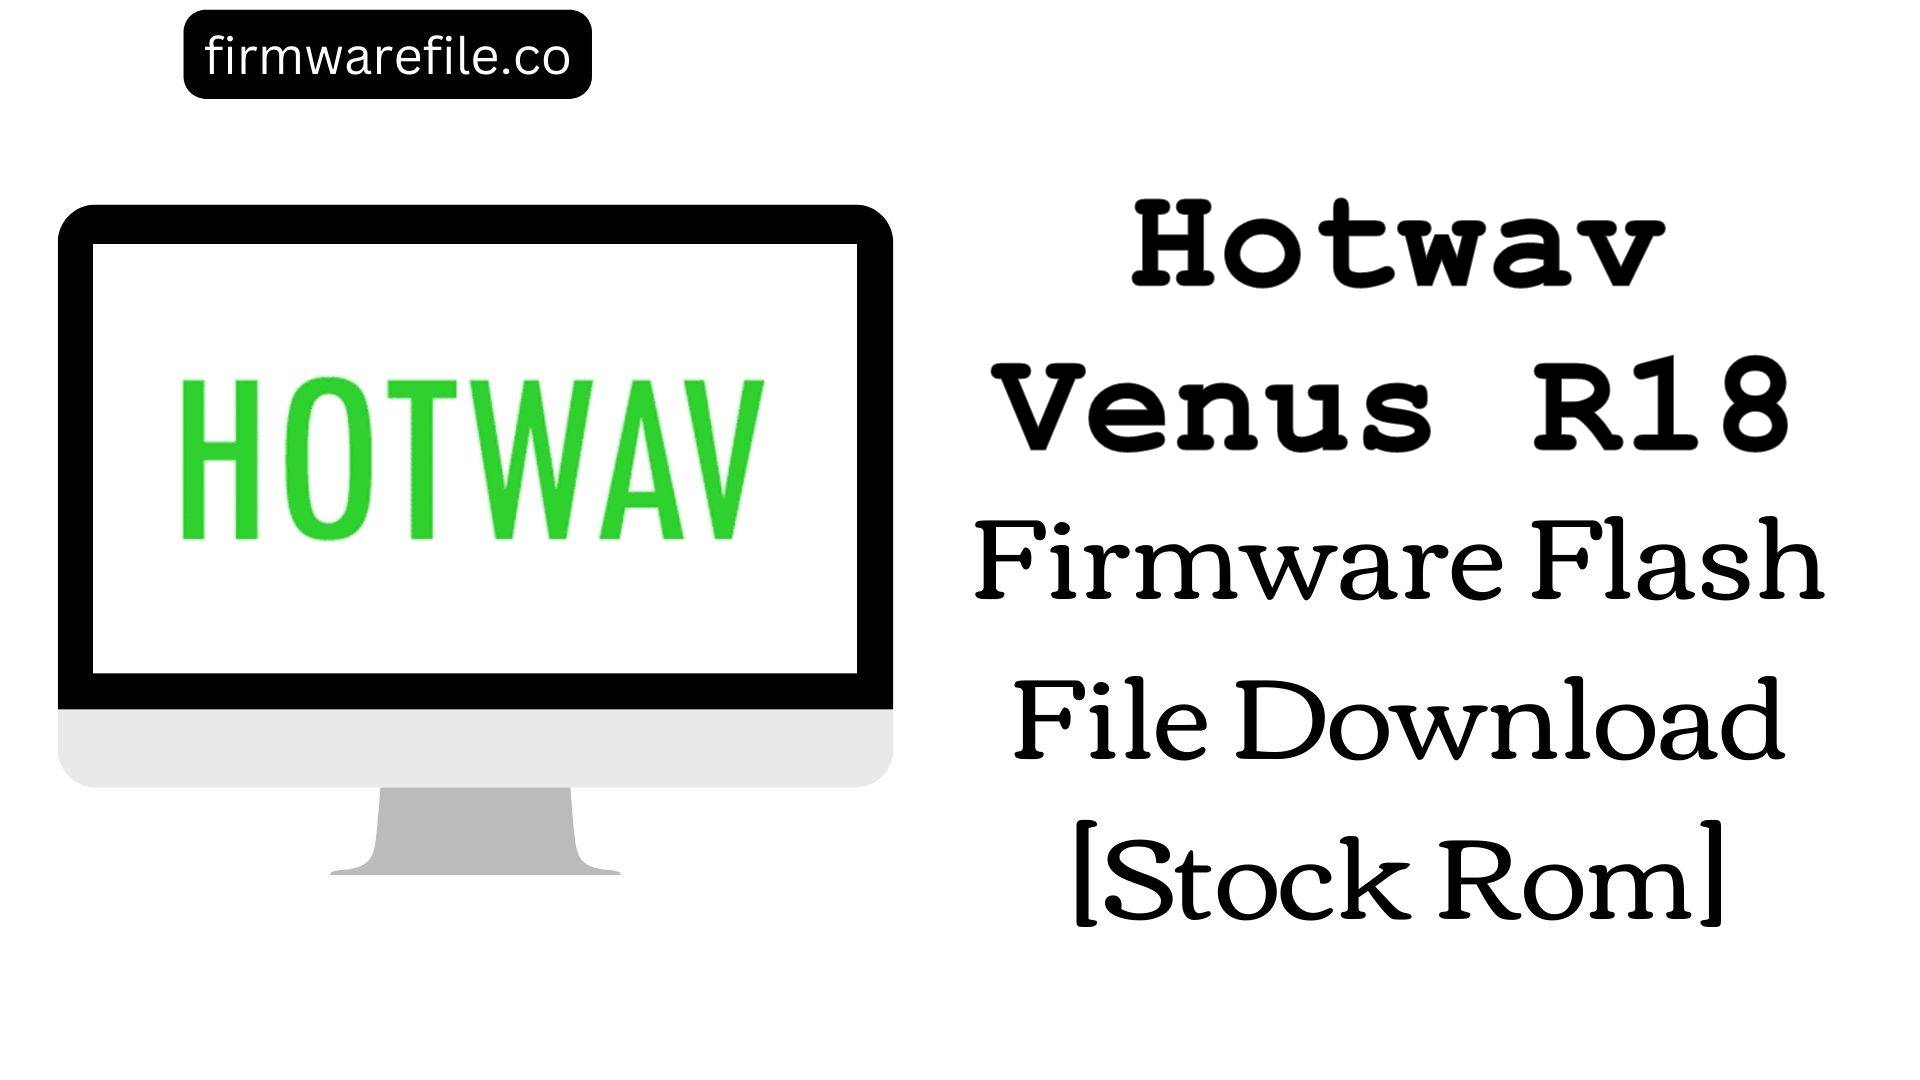 Hotwav Venus R18